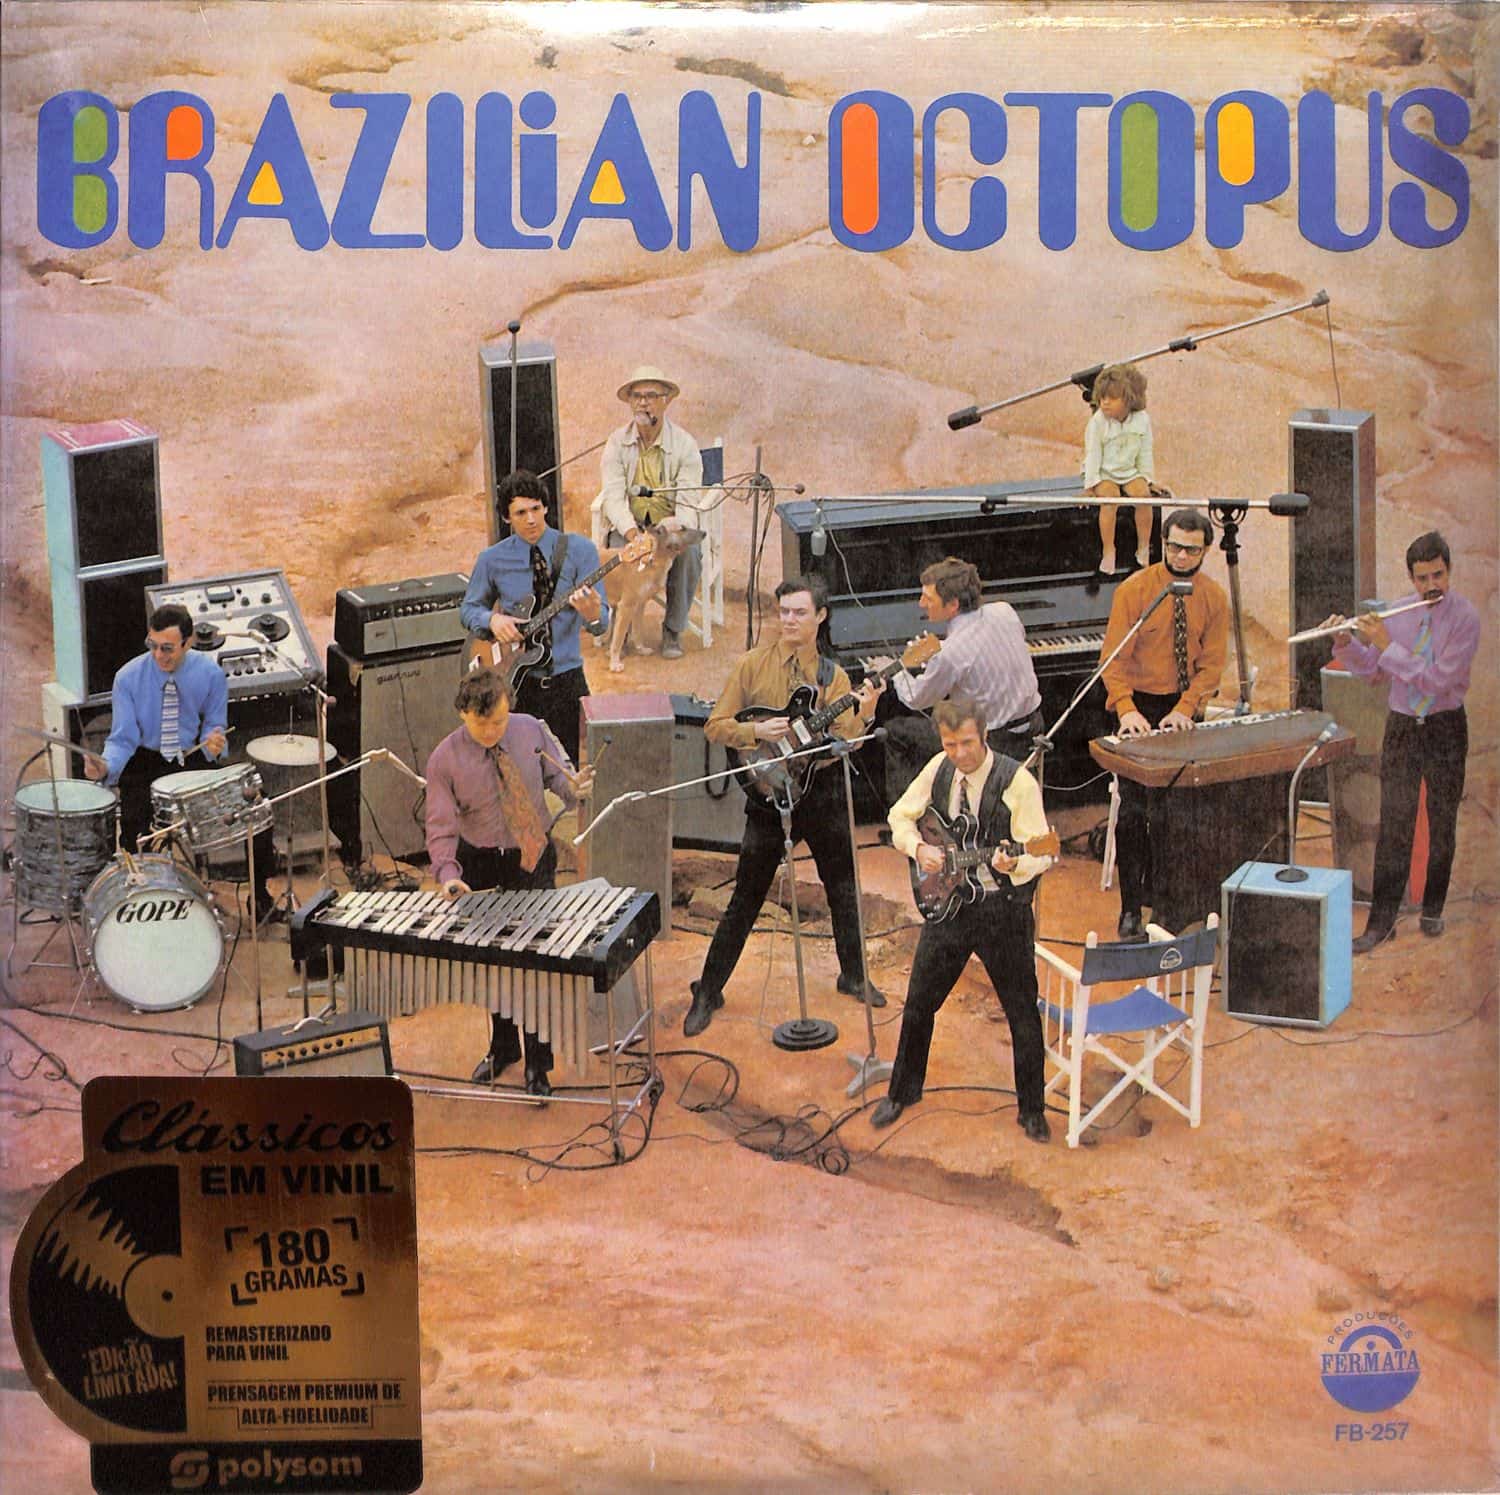 Brazilian Octopus - BRAZILIAN OCTOPUS 